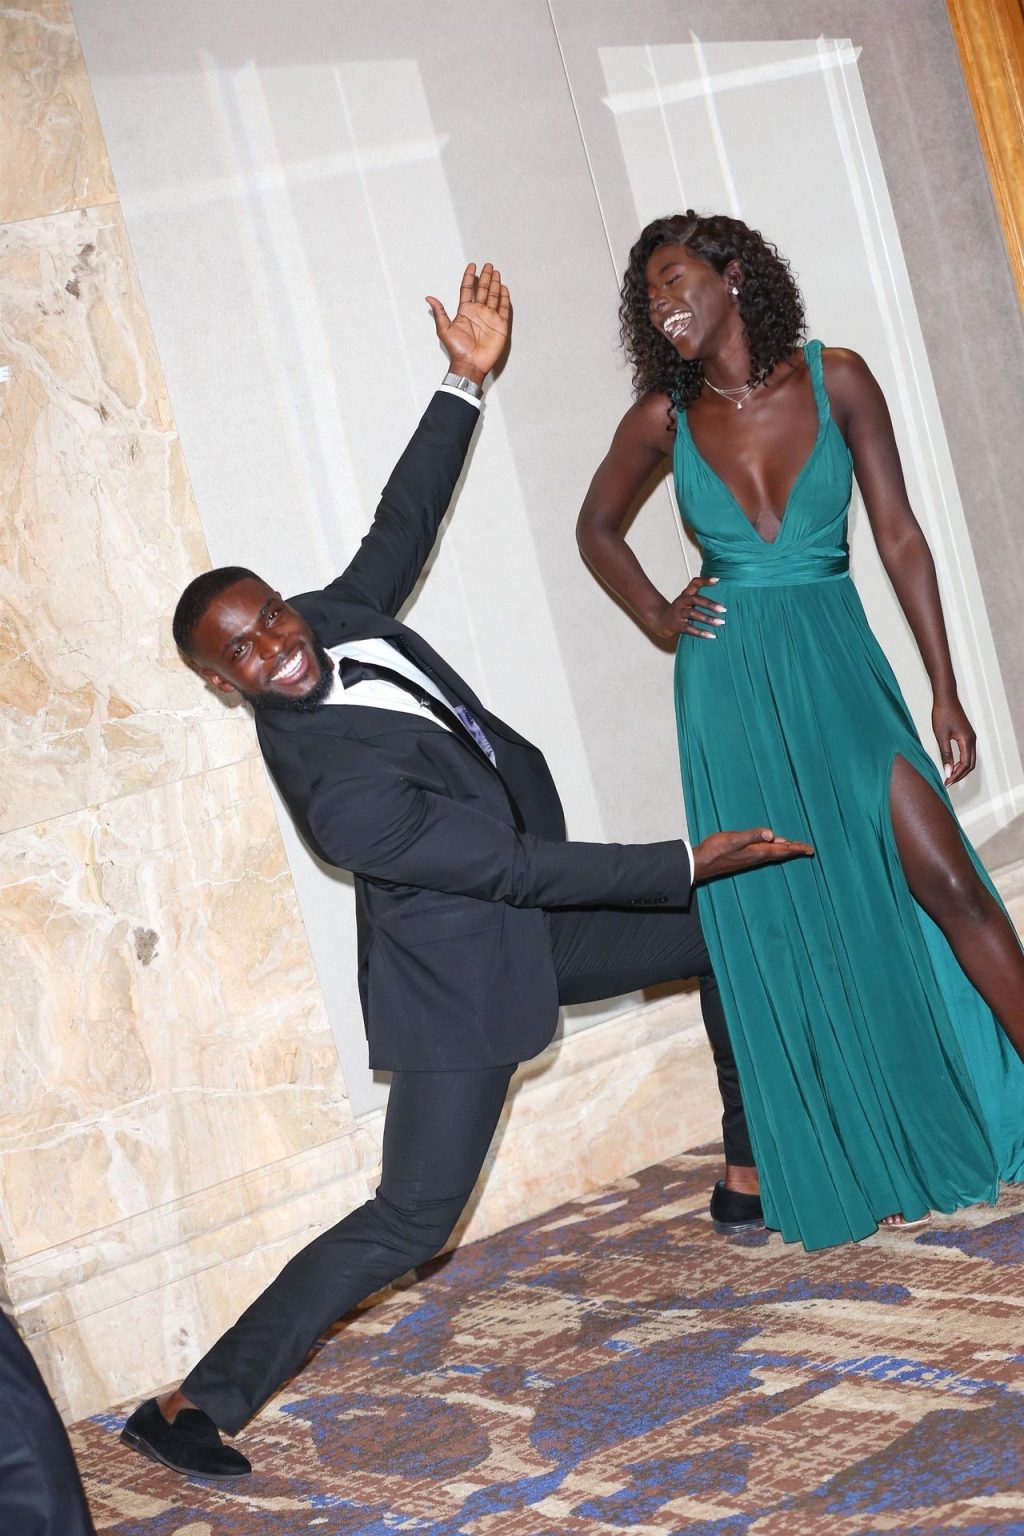 Mike Boateng &amp; Priscilla Anyabu Are Seen at British Ethnic Diversity Sports Awards (171 Photos)